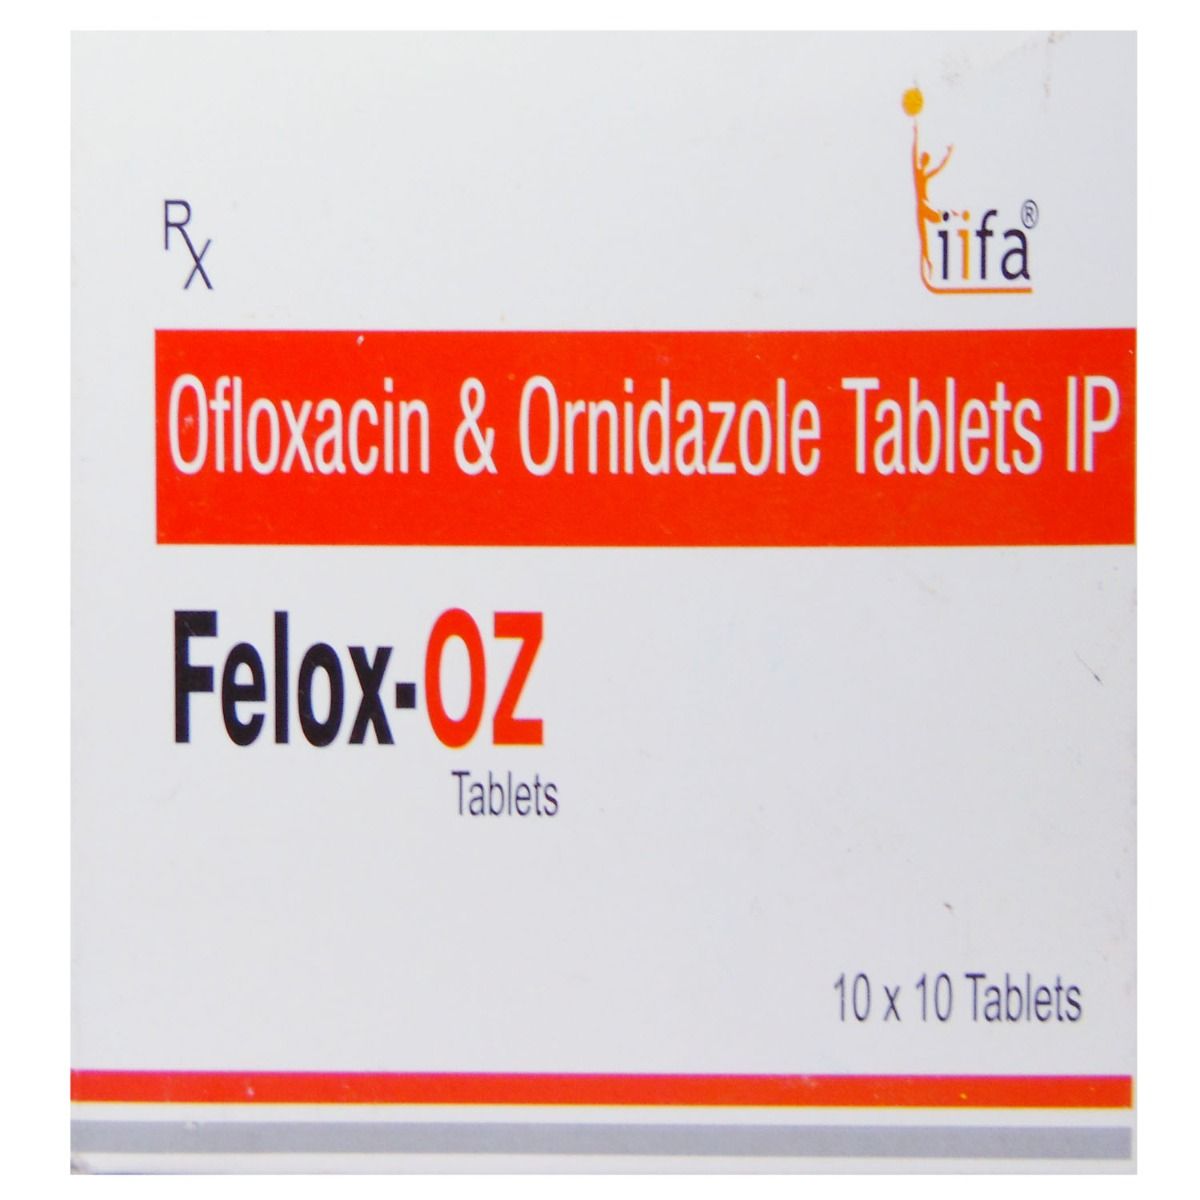 Felox-Oz Tablet 10's, Pack of 10 TabletS